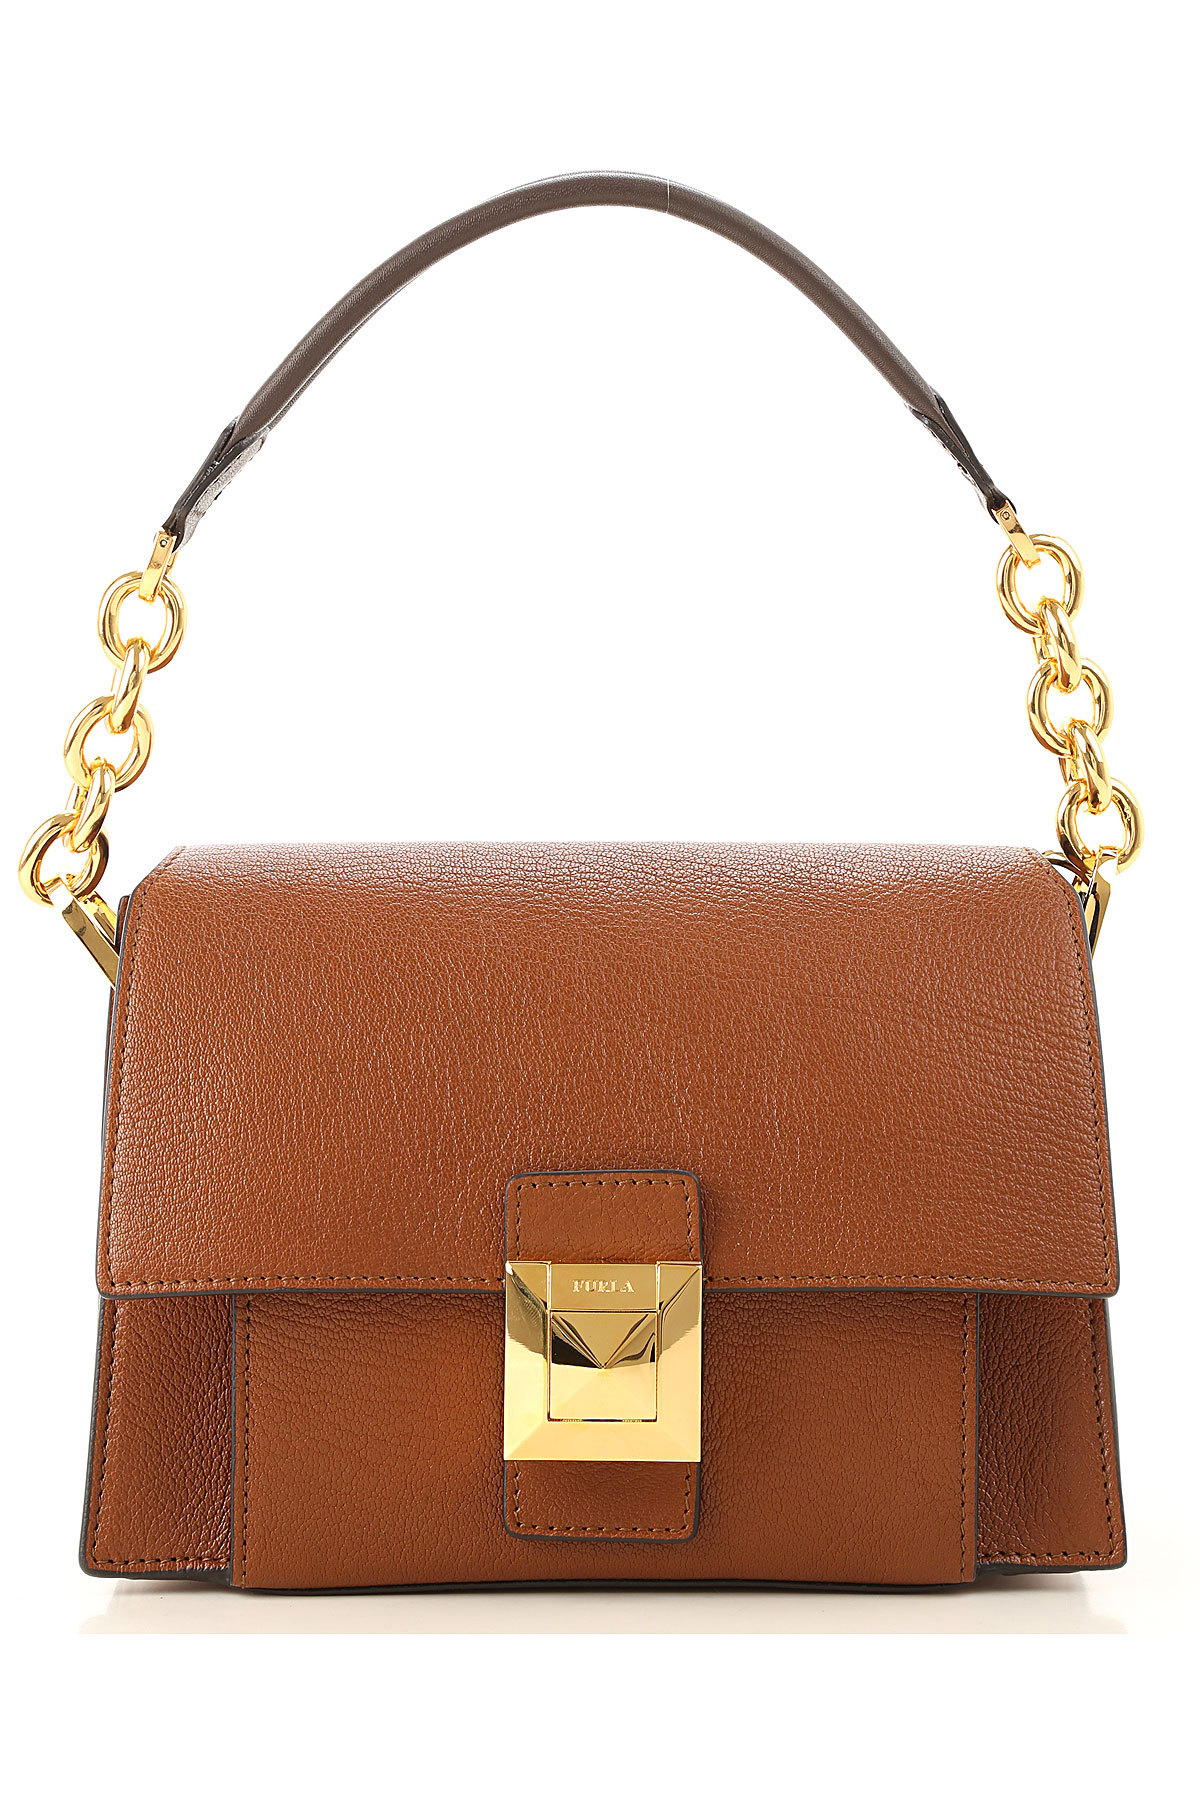 Handbags Furla, Style code: 1021342--